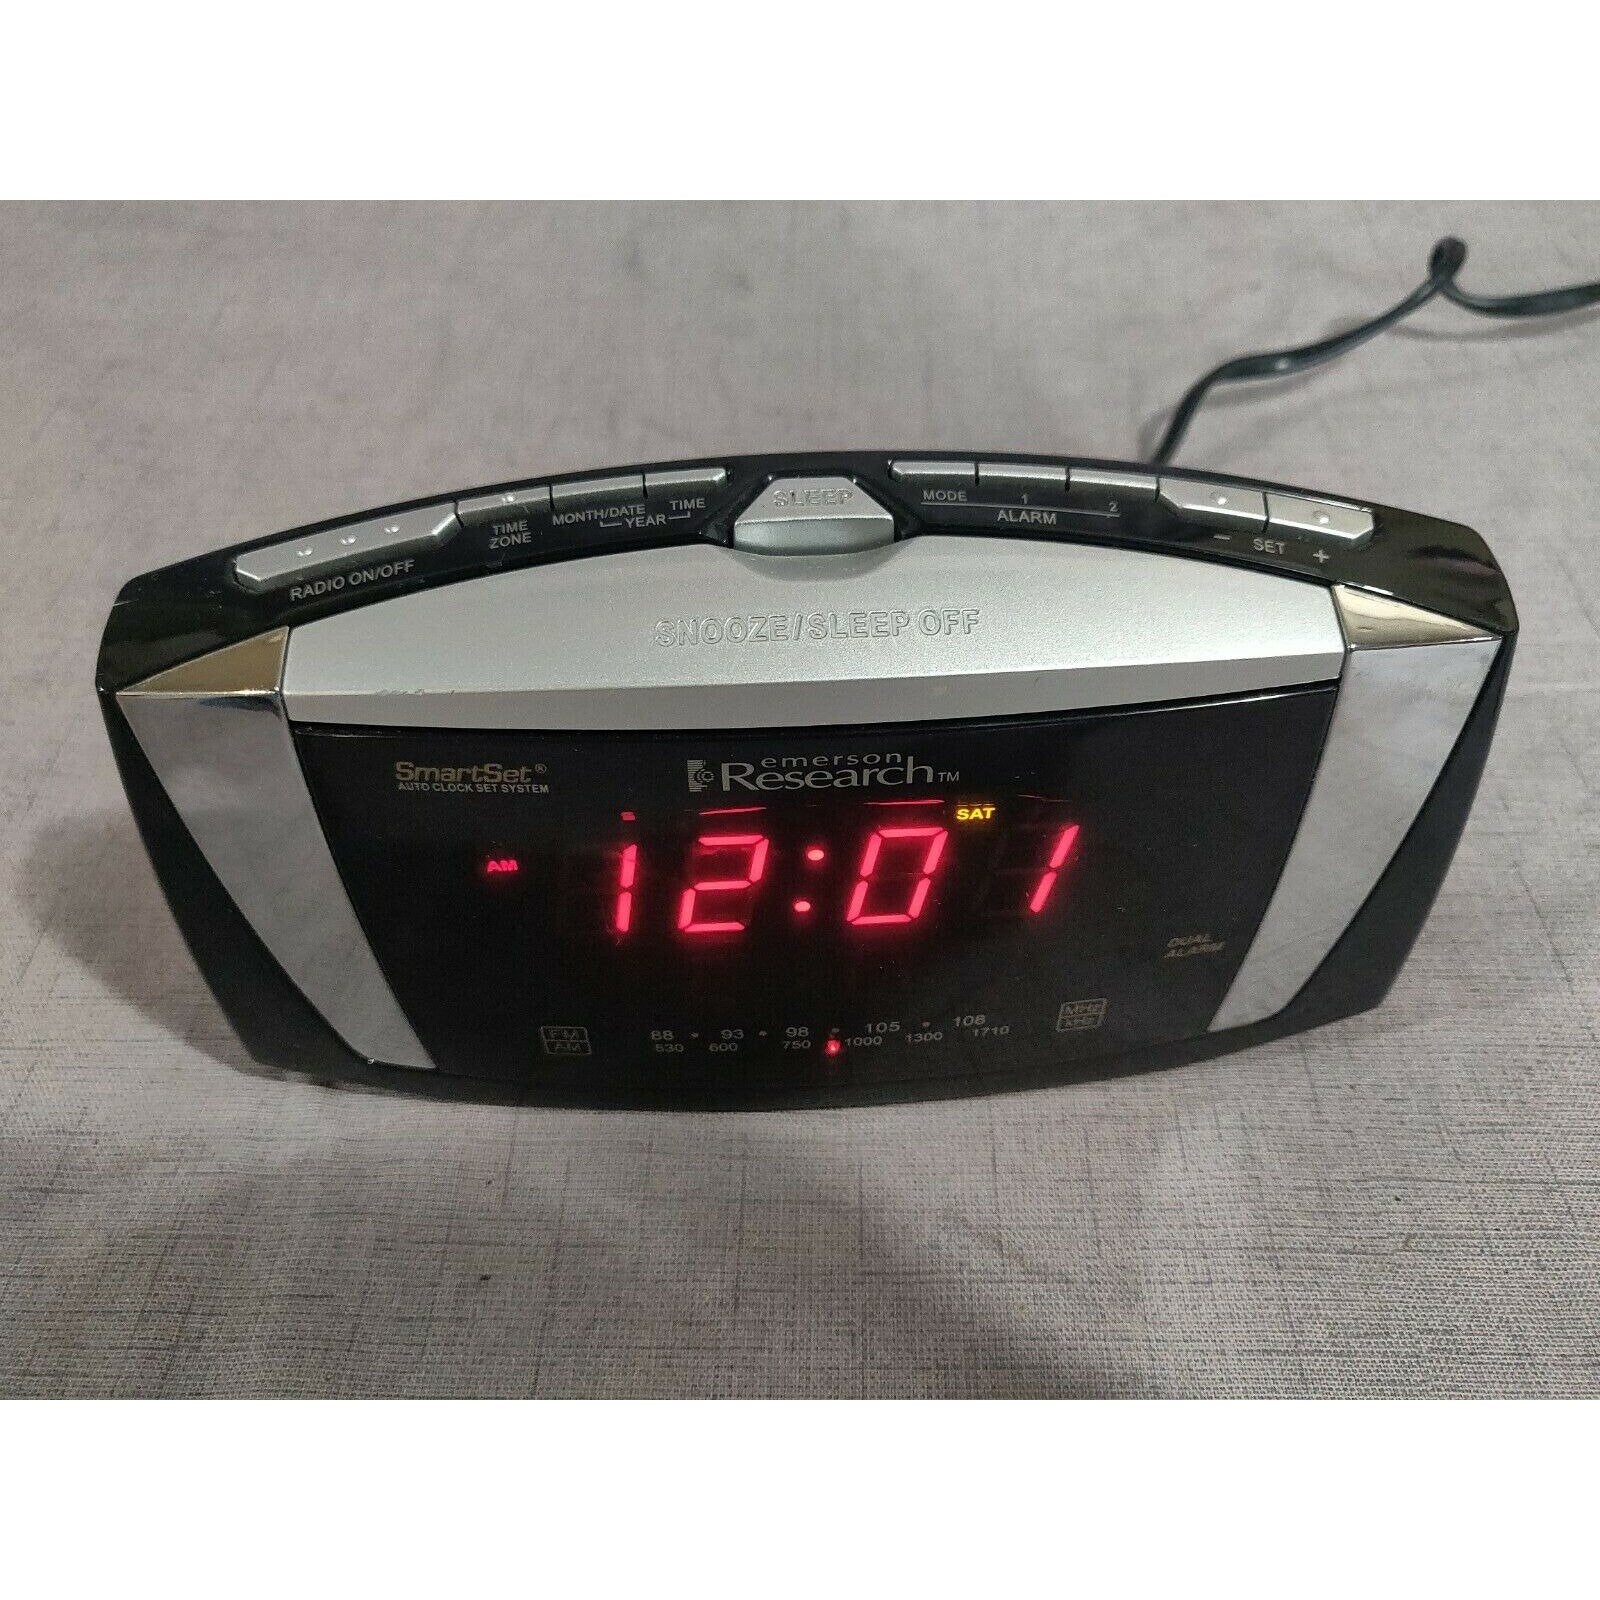 Emerson research alarm clock model CKS5055B